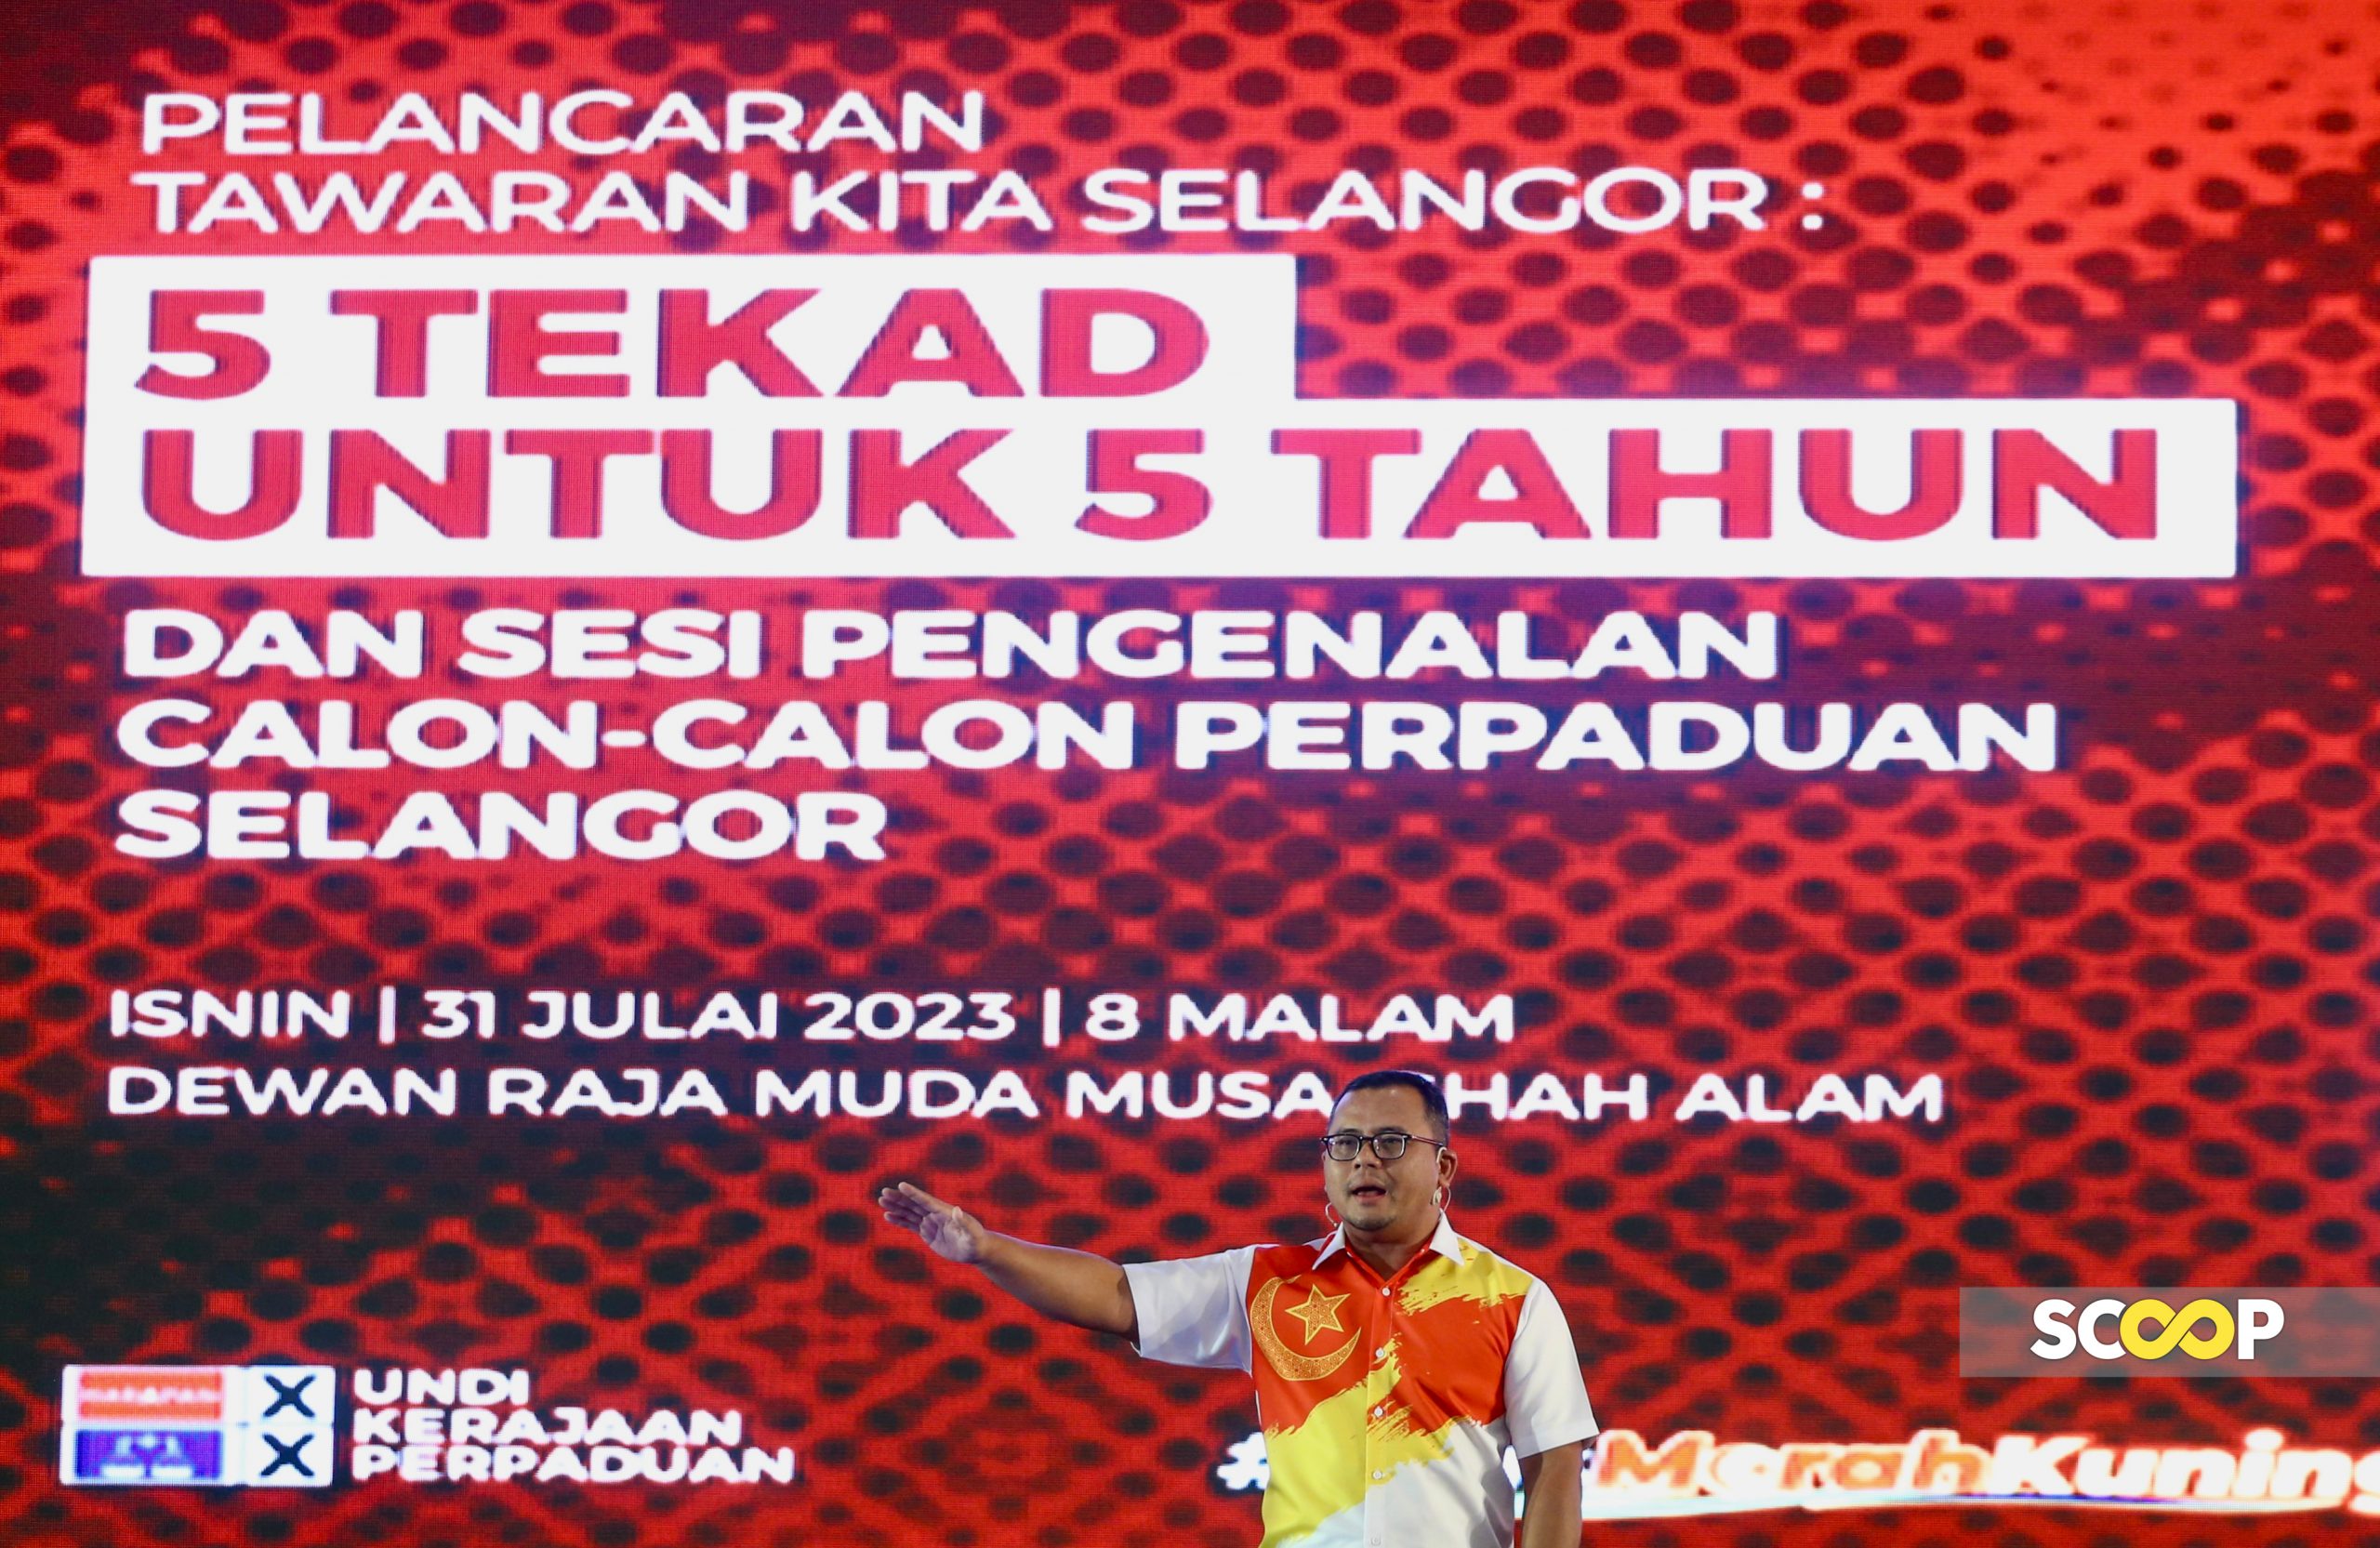 Selangor govt's 5 election pledges set to transform state